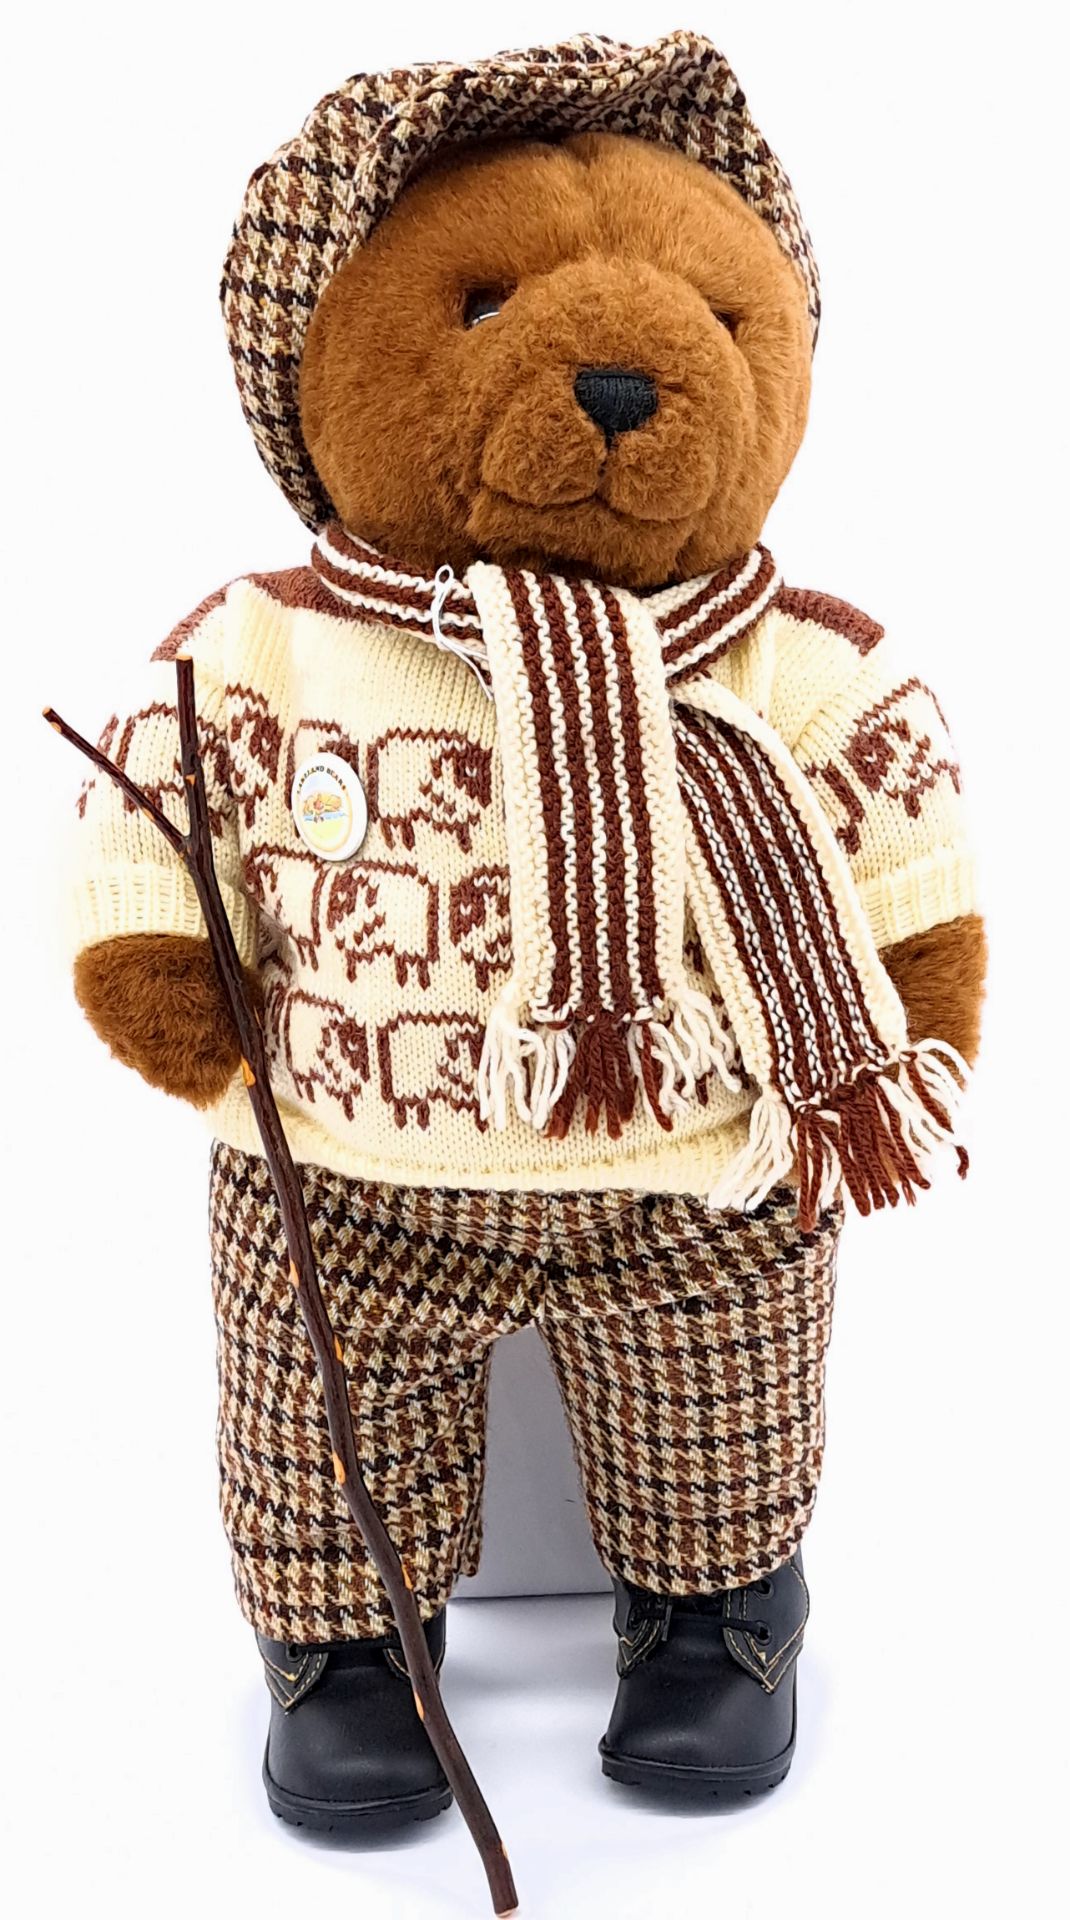 Little Folk Lakeland Bears (UK) vintage teddy bear